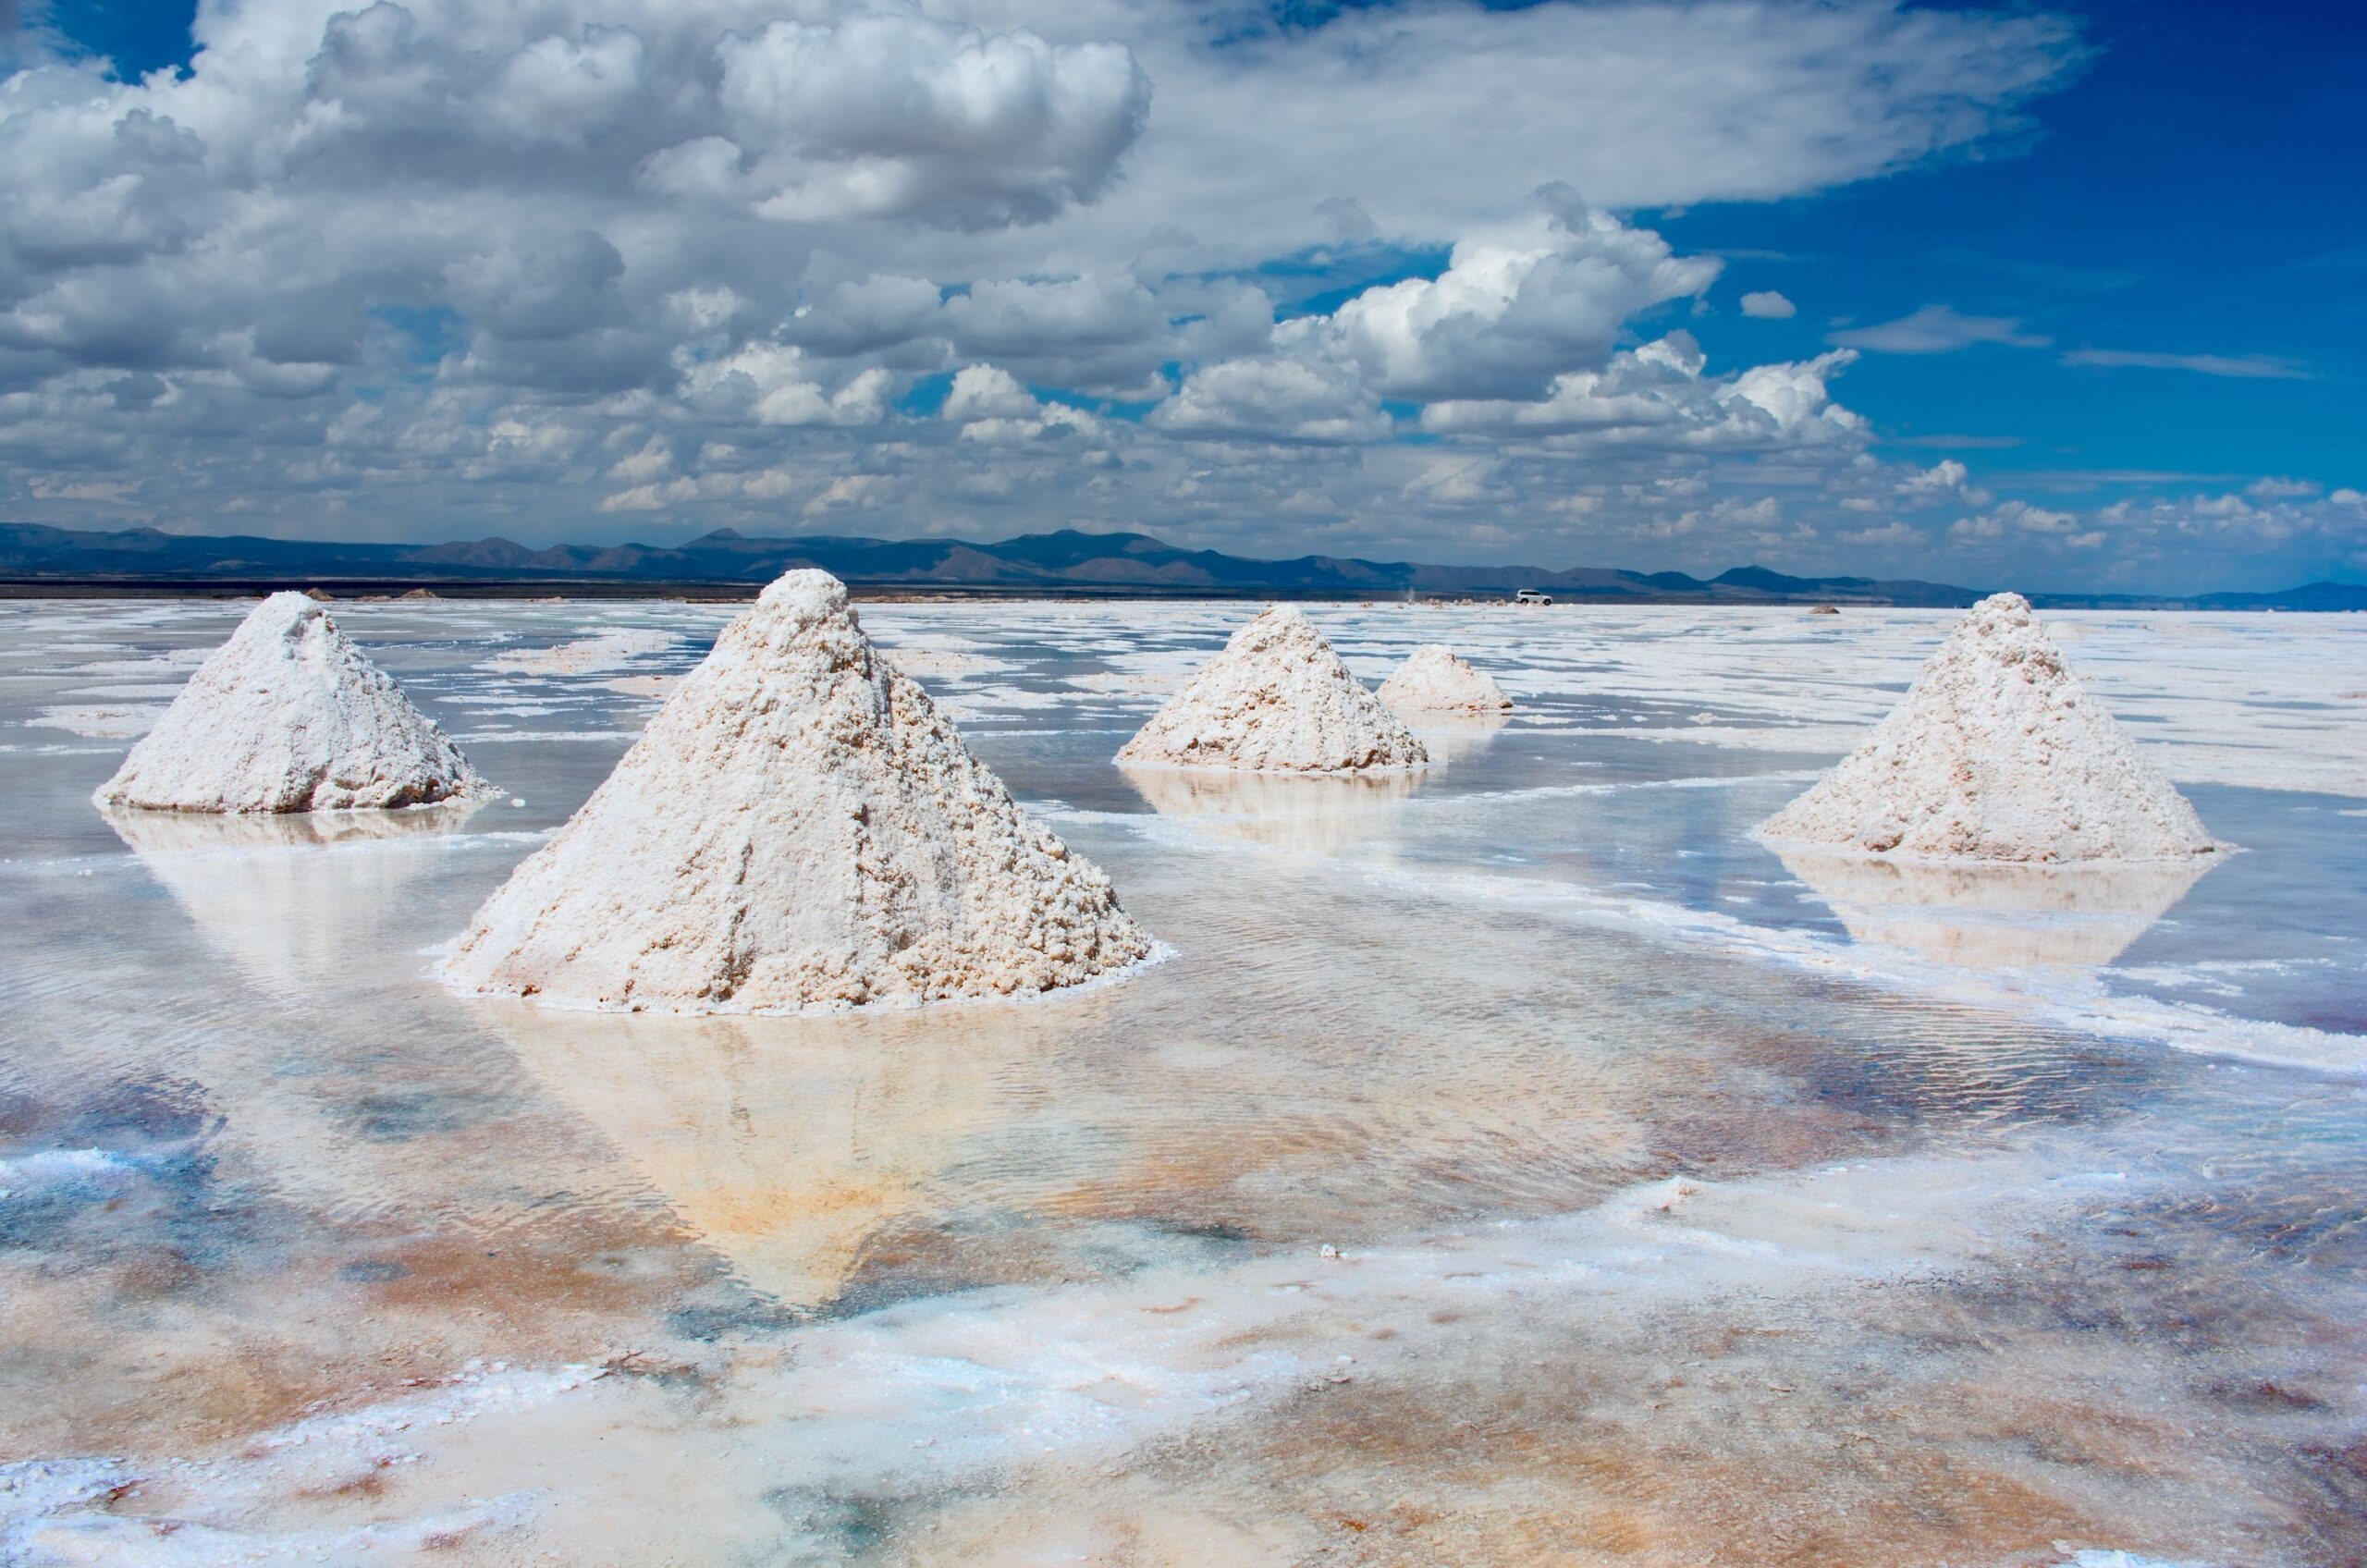 Salar de Uyuni: Unraveling the Mysteries of the World's Largest Salt Flat